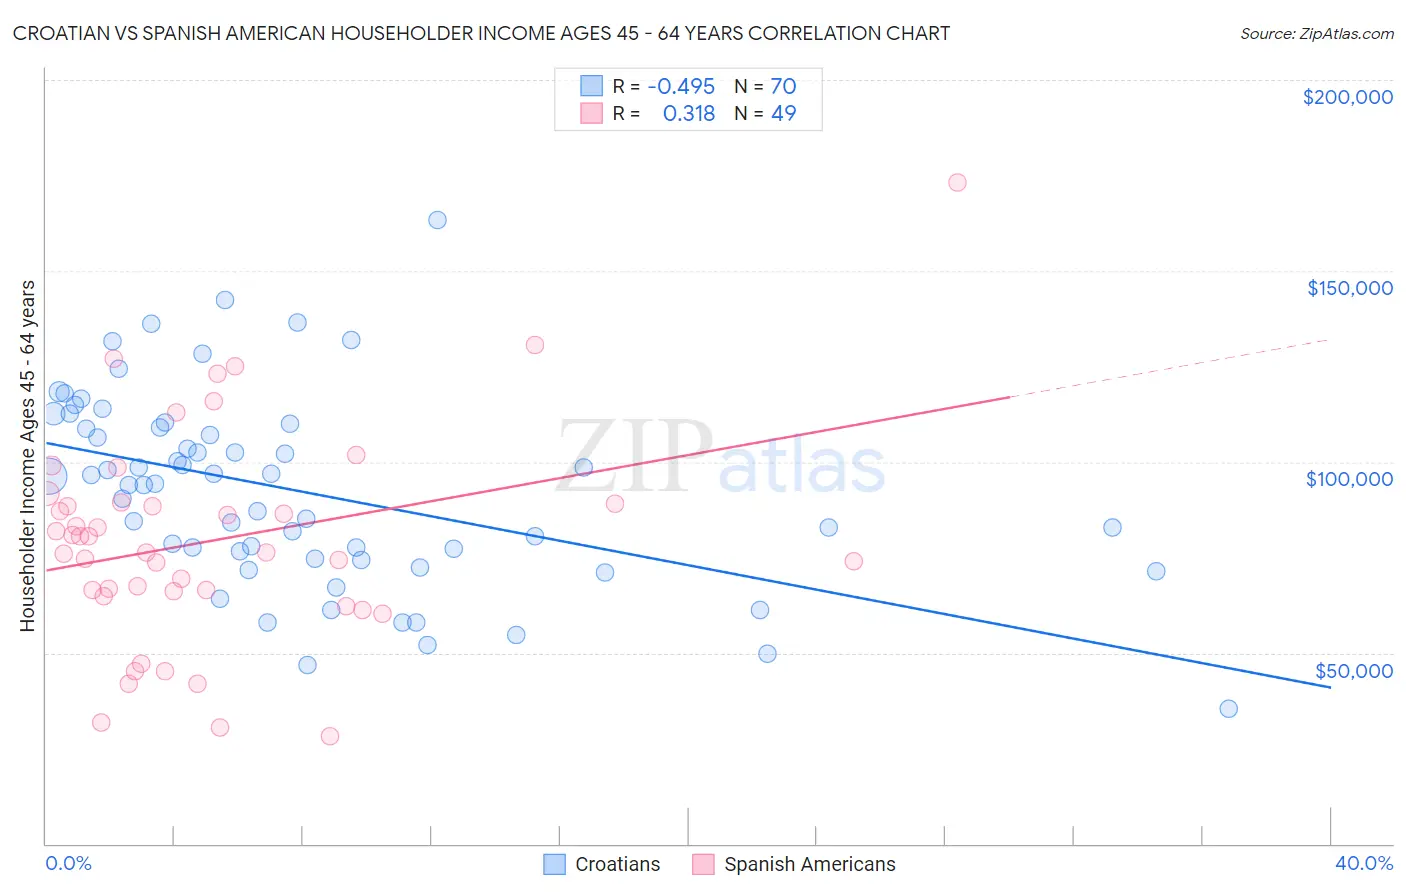 Croatian vs Spanish American Householder Income Ages 45 - 64 years